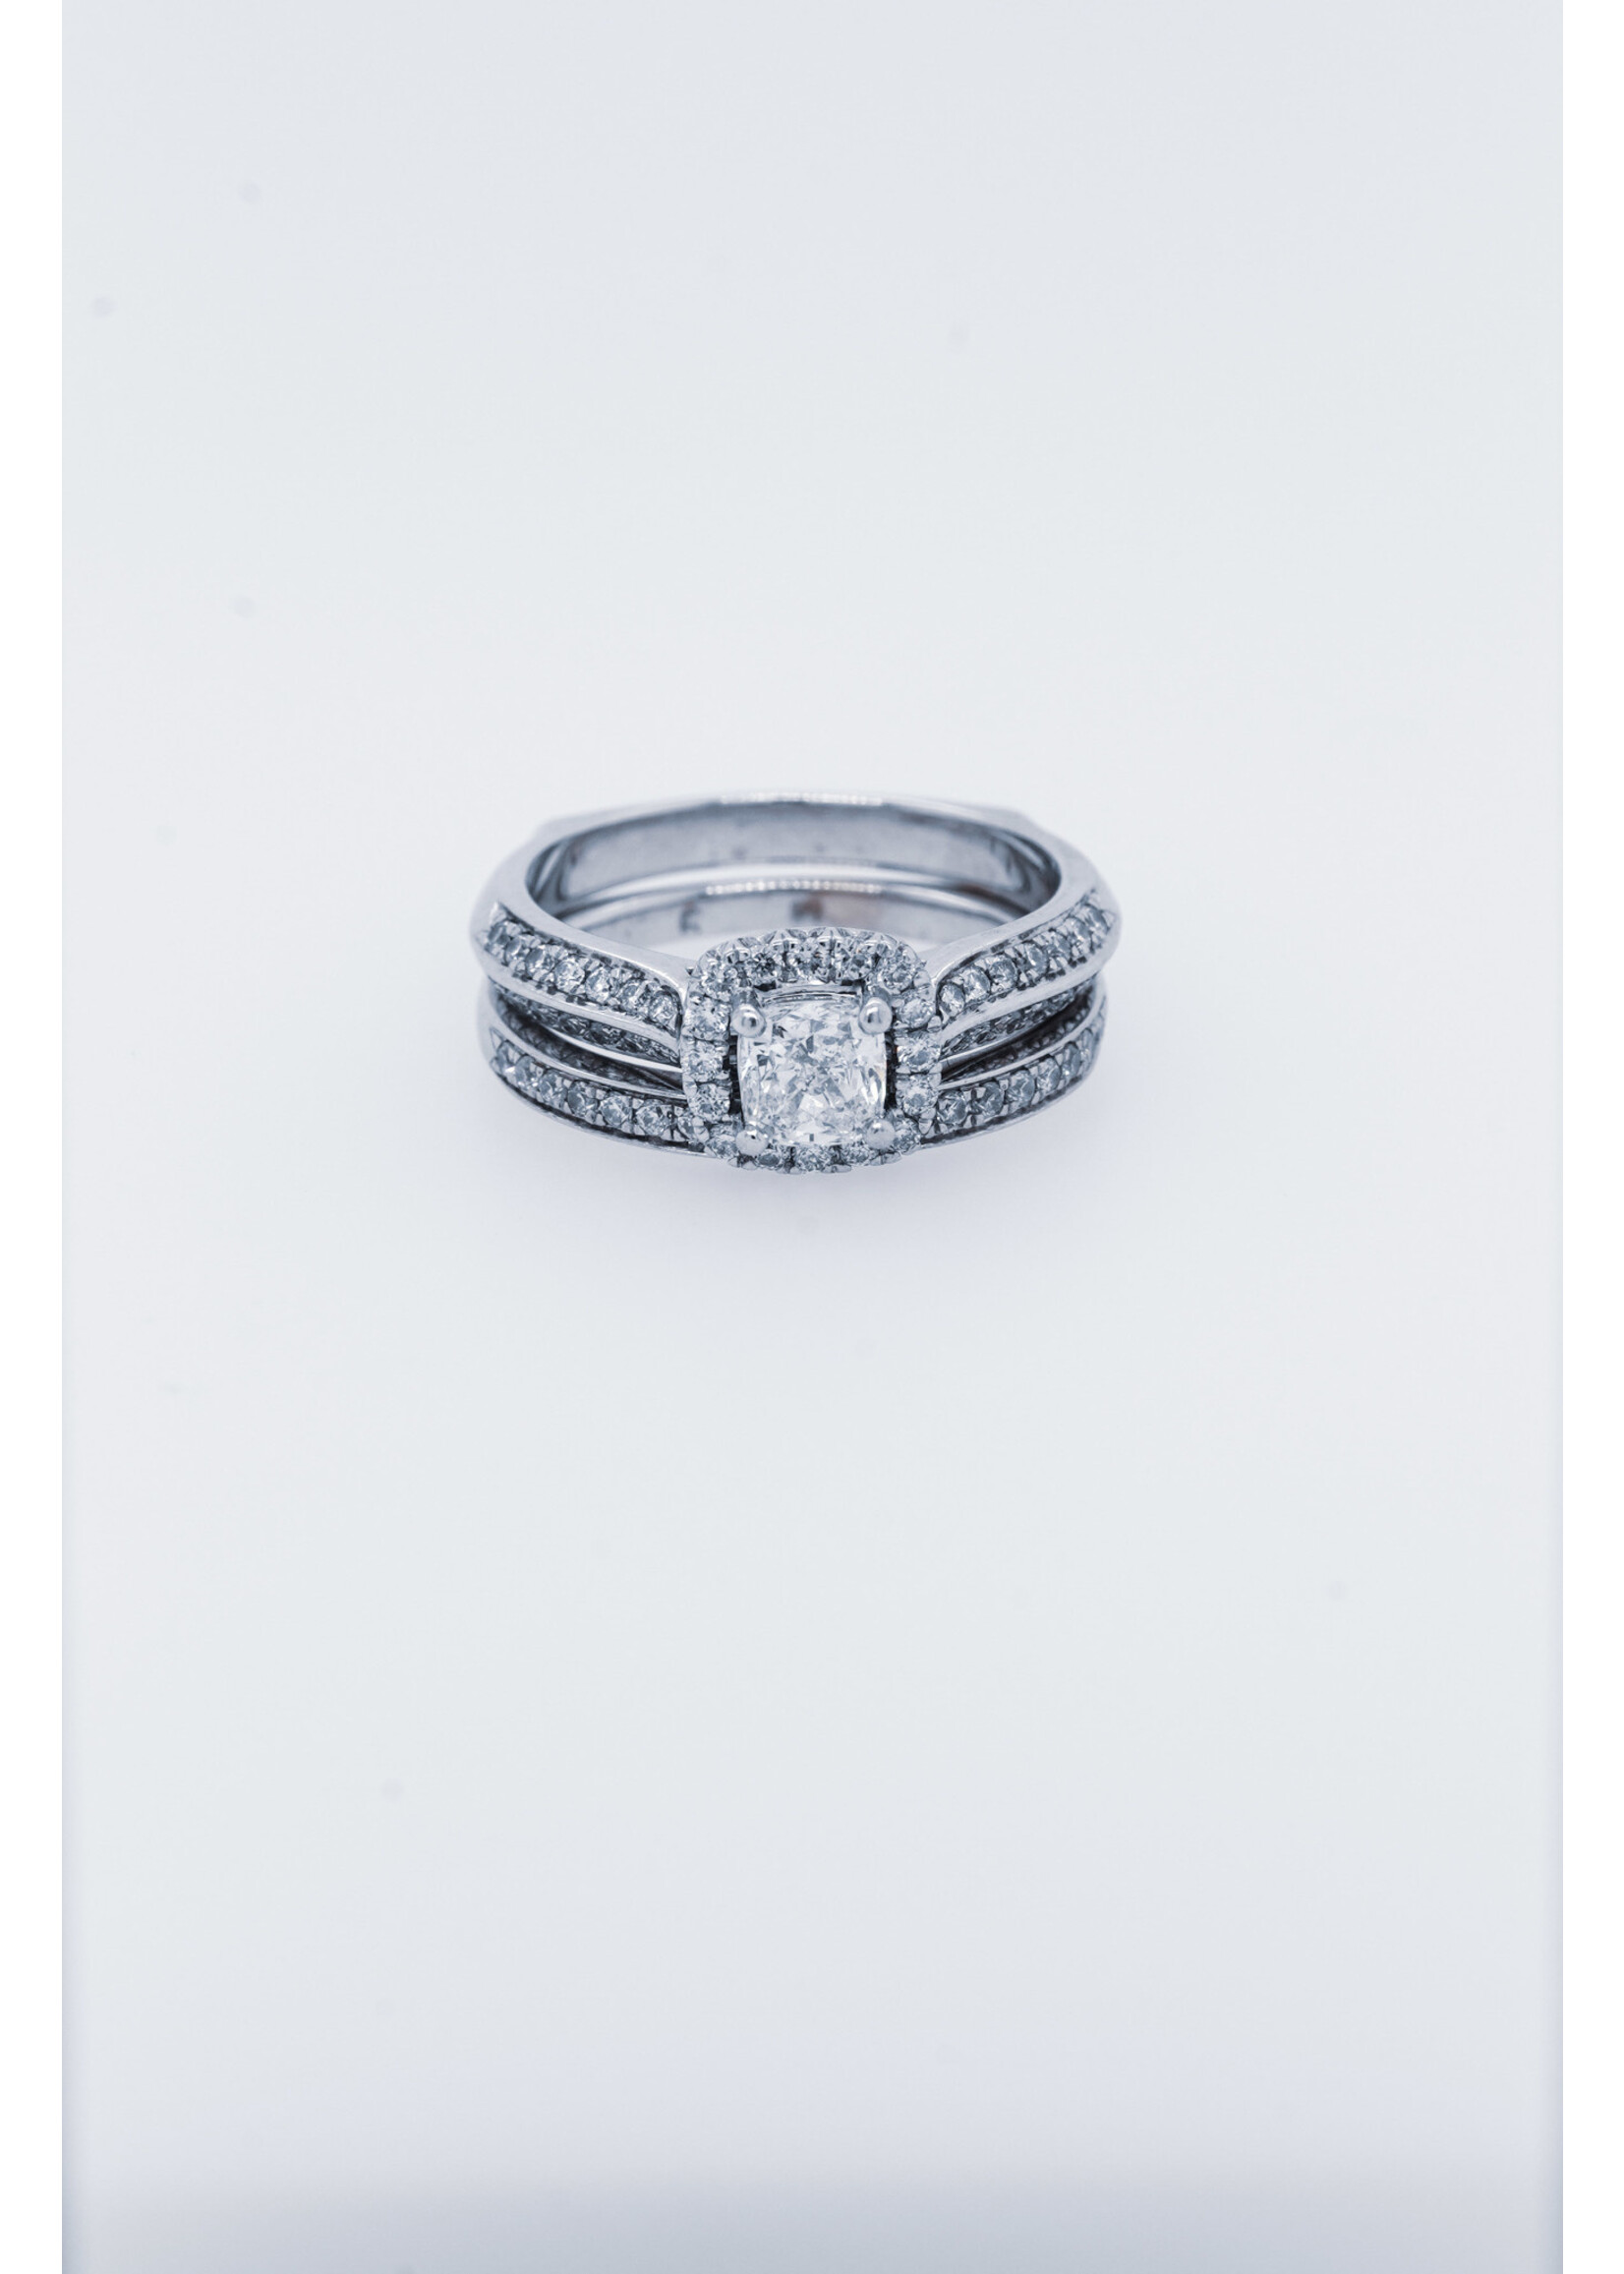 14KW 5.2g 1.03ctw (.49ctr) F/SI1 Ikuma Cushion Diamond Halo Engagement Ring (size 5.5)